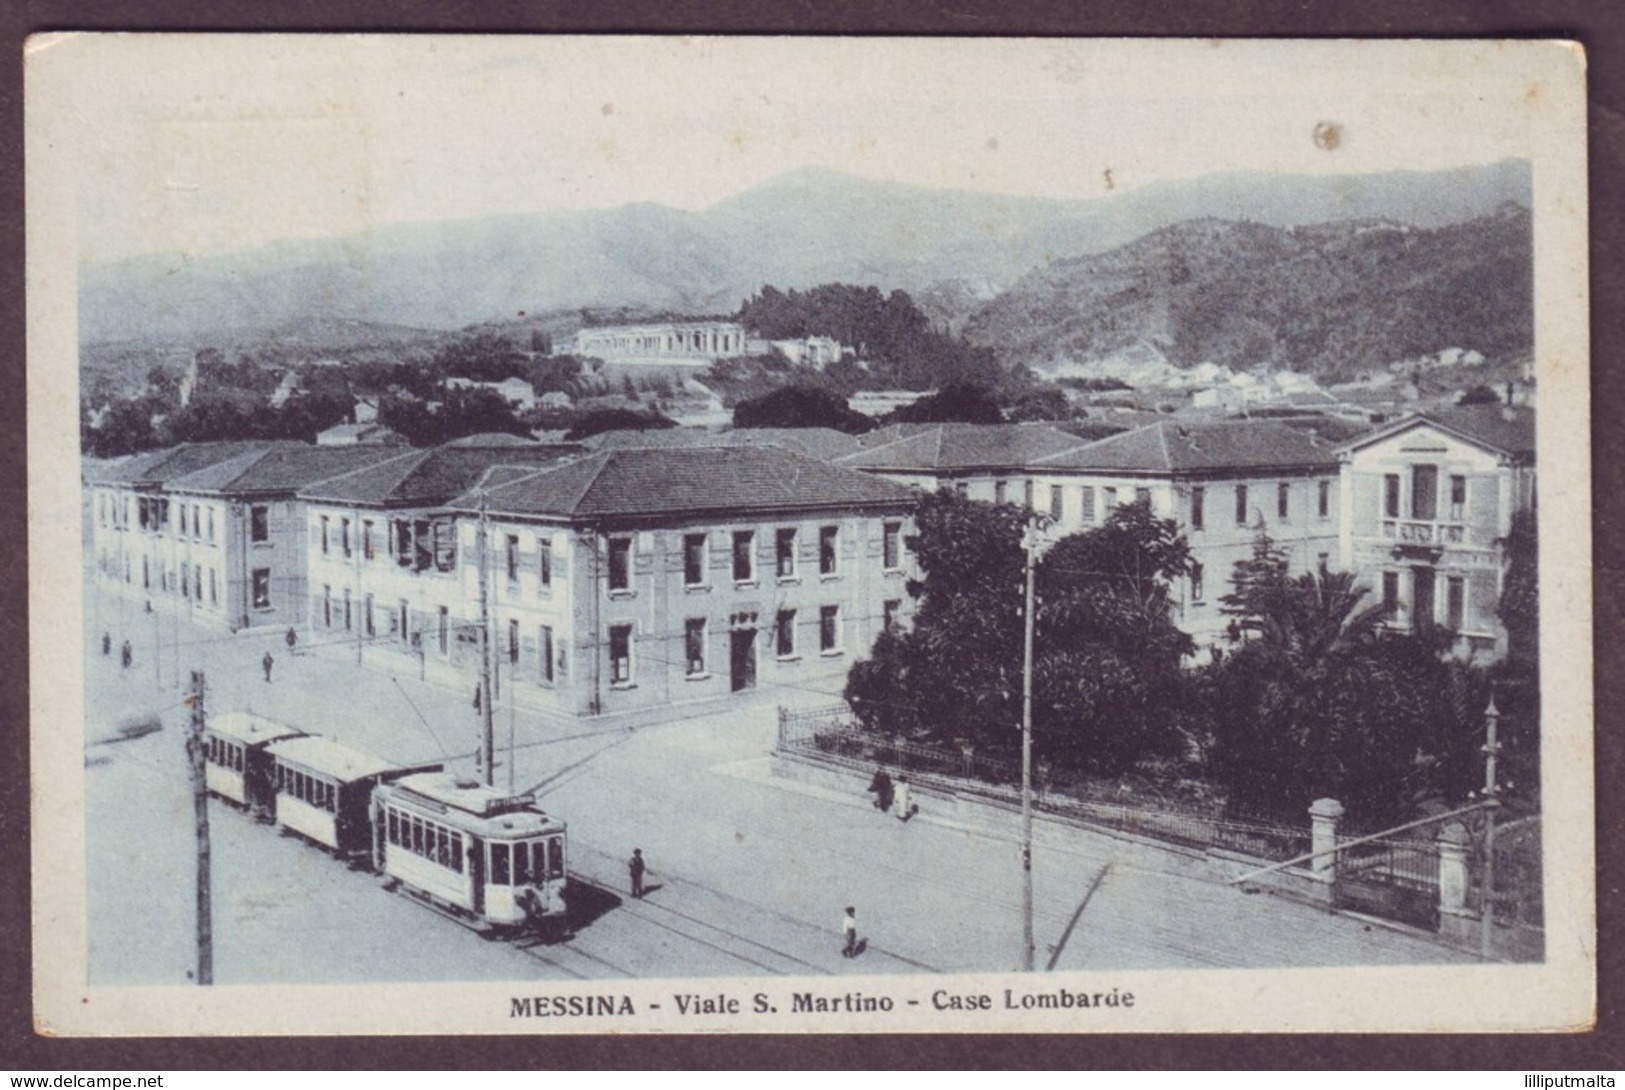 1920s Messina Italy Postcard Showing Viale S Martino – Case Lombarde Italia Cartolina Sicilia Sicily - Messina